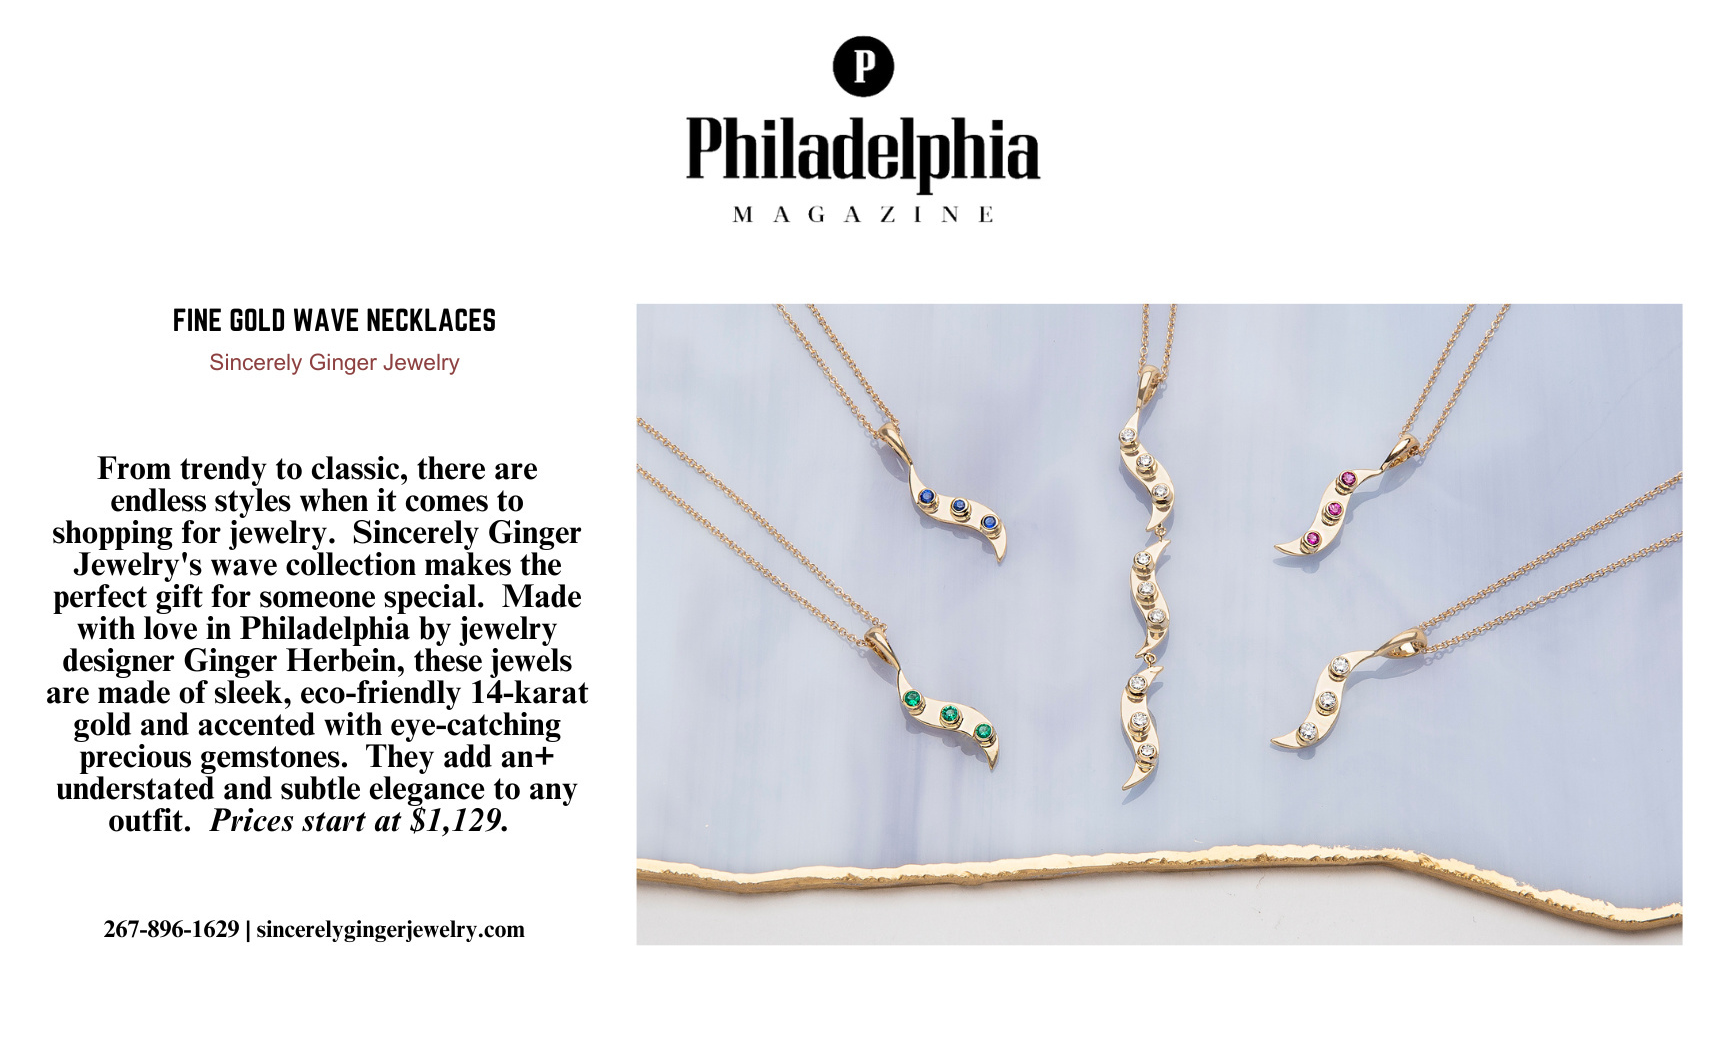 Sincerely Ginger Jewelry Philadelphia Magazine Spotlight